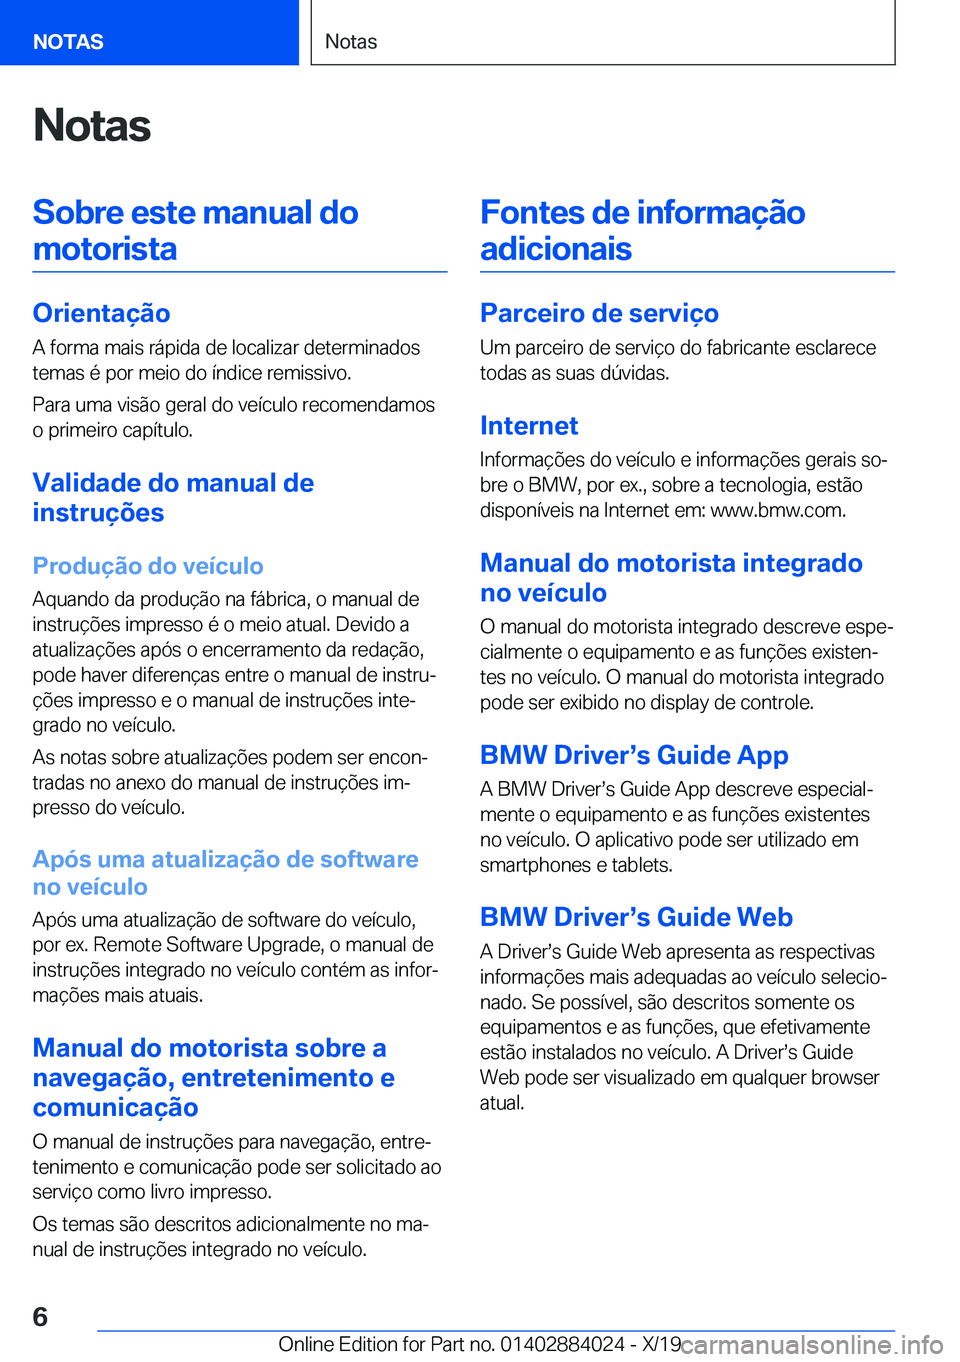 BMW X7 2020  Manual do condutor (in Portuguese) �N�o�t�a�s�S�o�b�r�e��e�s�t�e��m�a�n�u�a�l��d�o�m�o�t�o�r�i�s�t�a
�O�r�i�e�n�t�a�